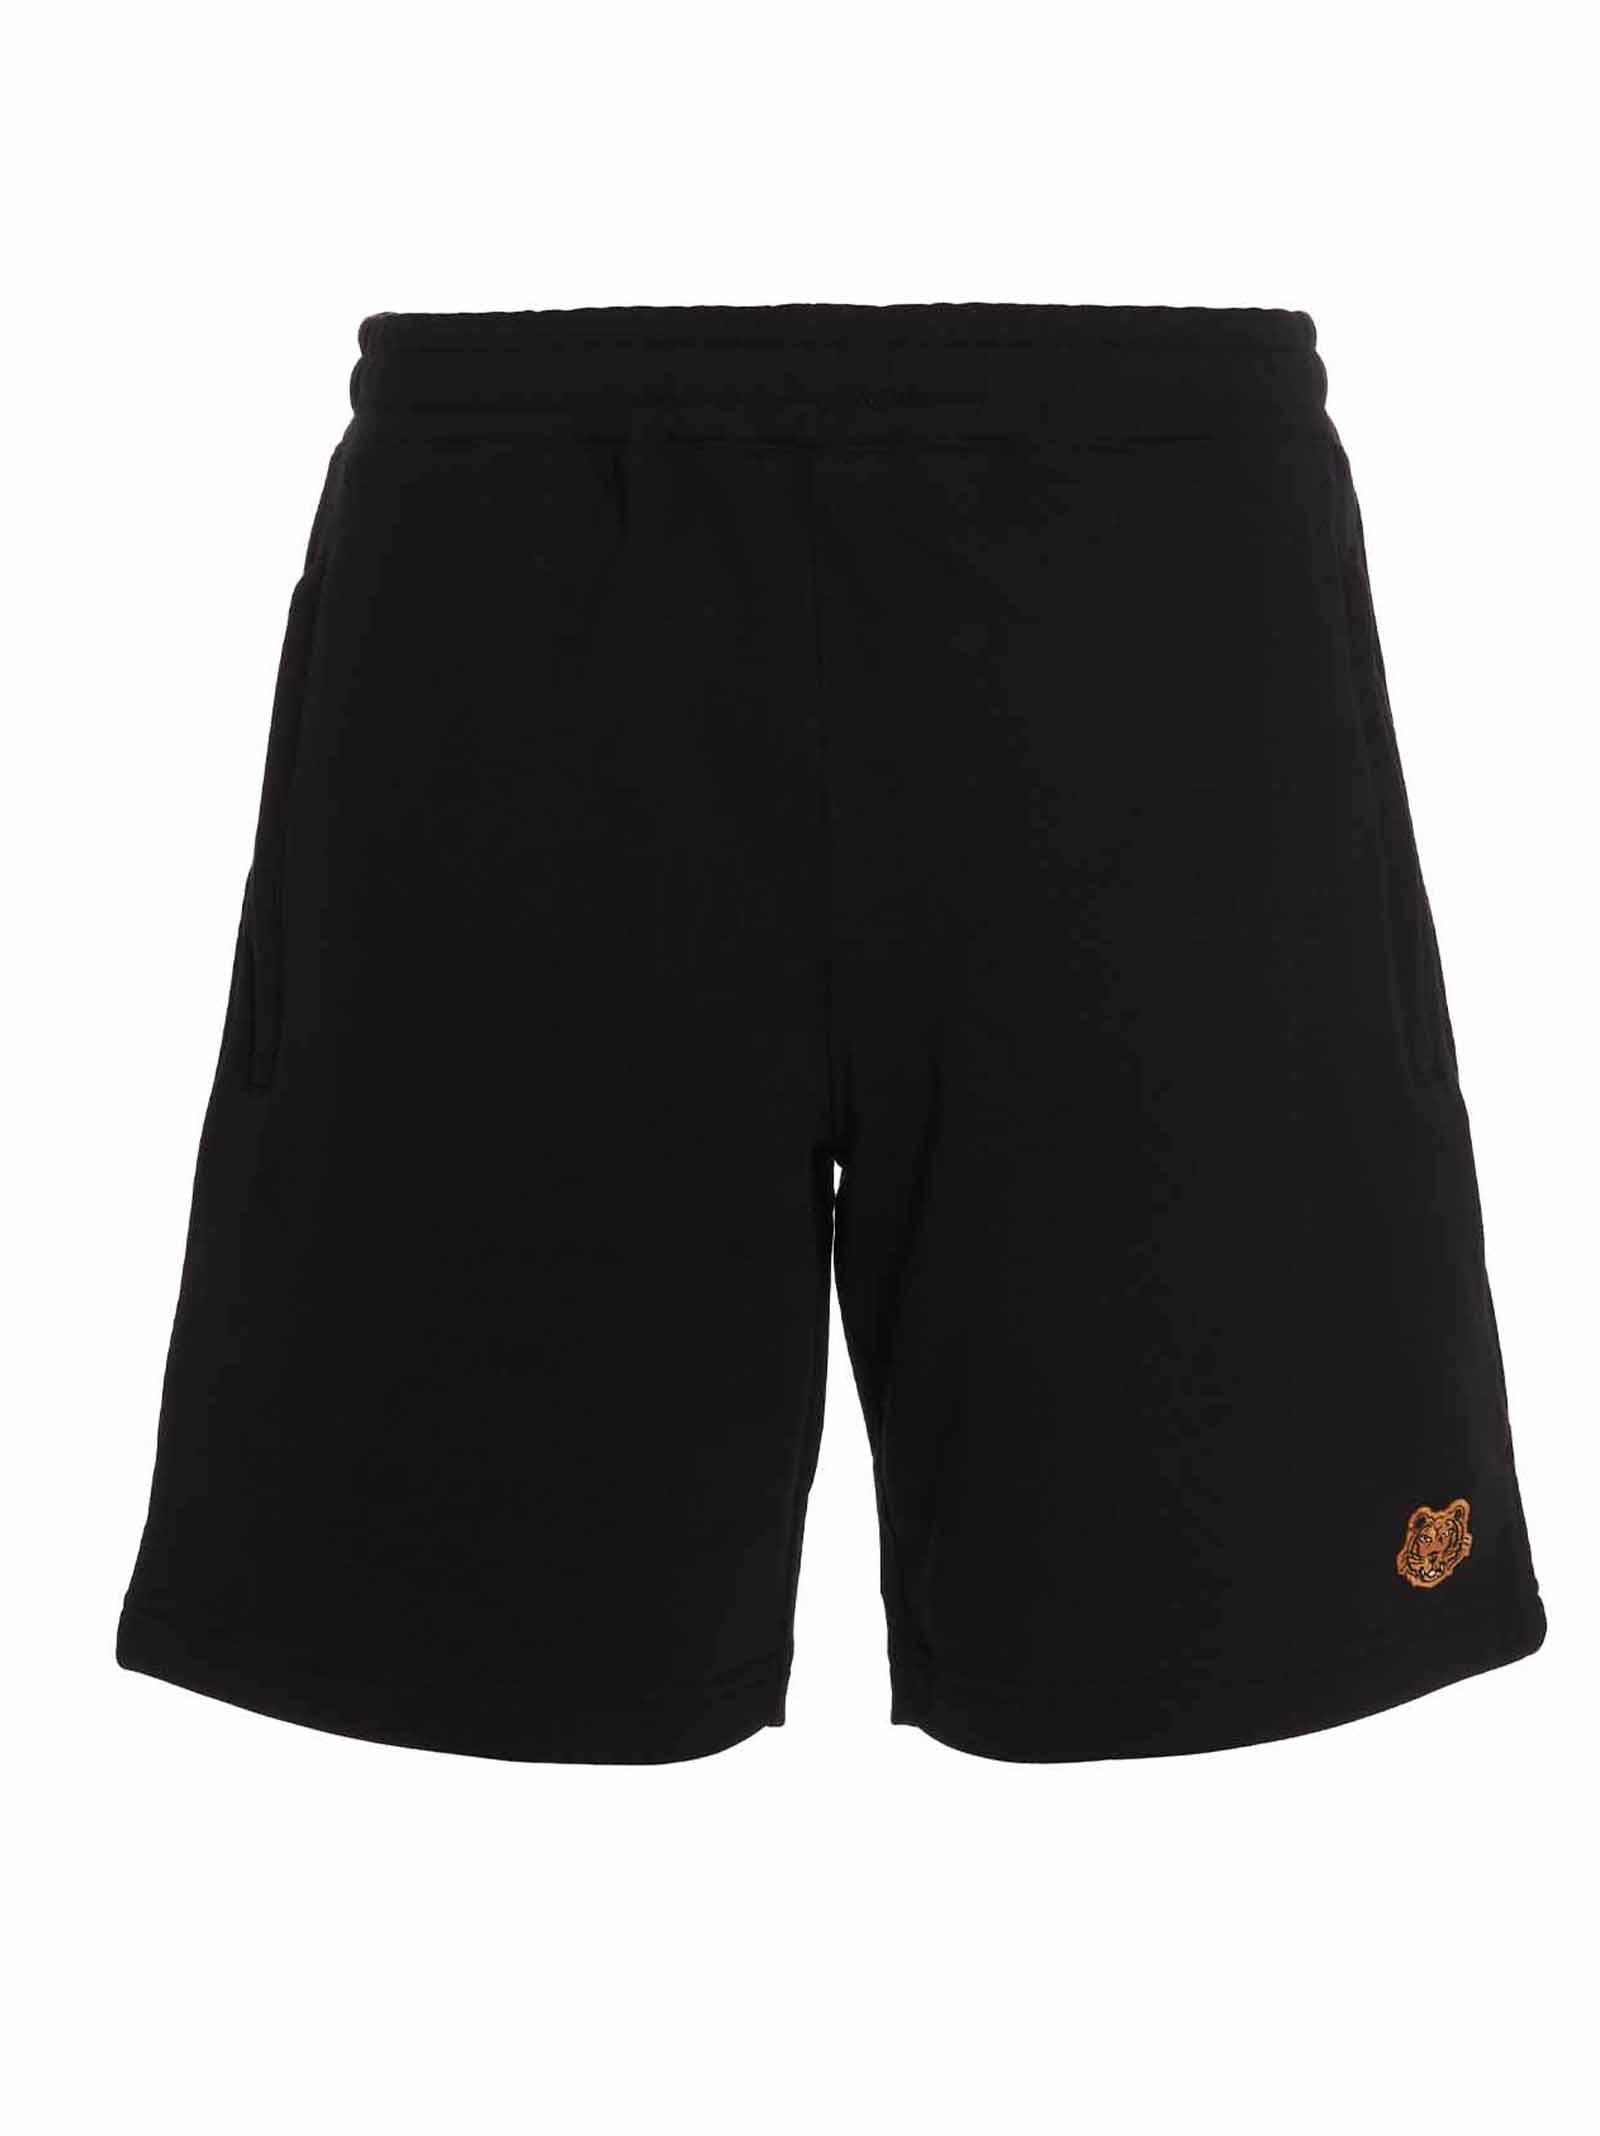 Kenzo tiger Crest Shorts